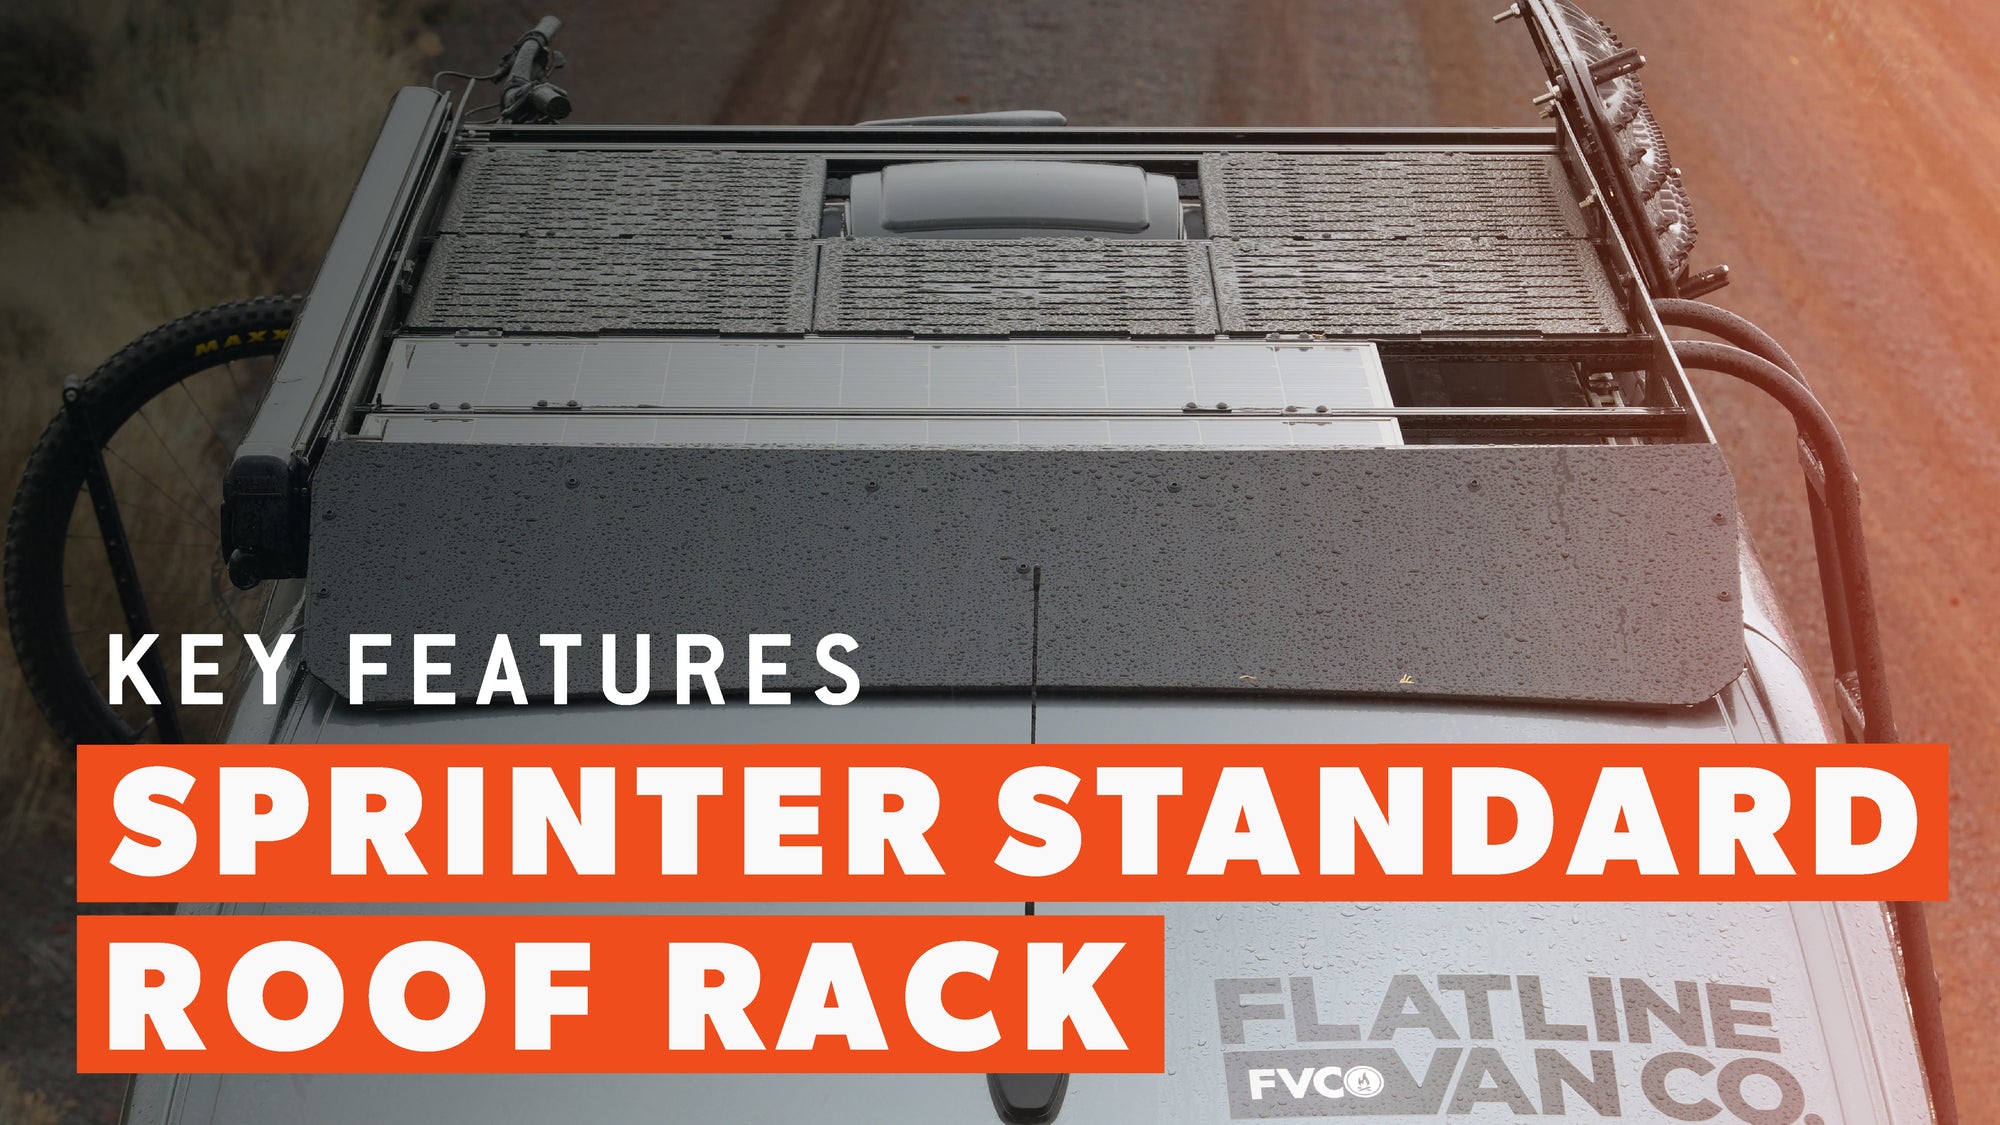 Sprinter Standard Roof Rack Key Features Video